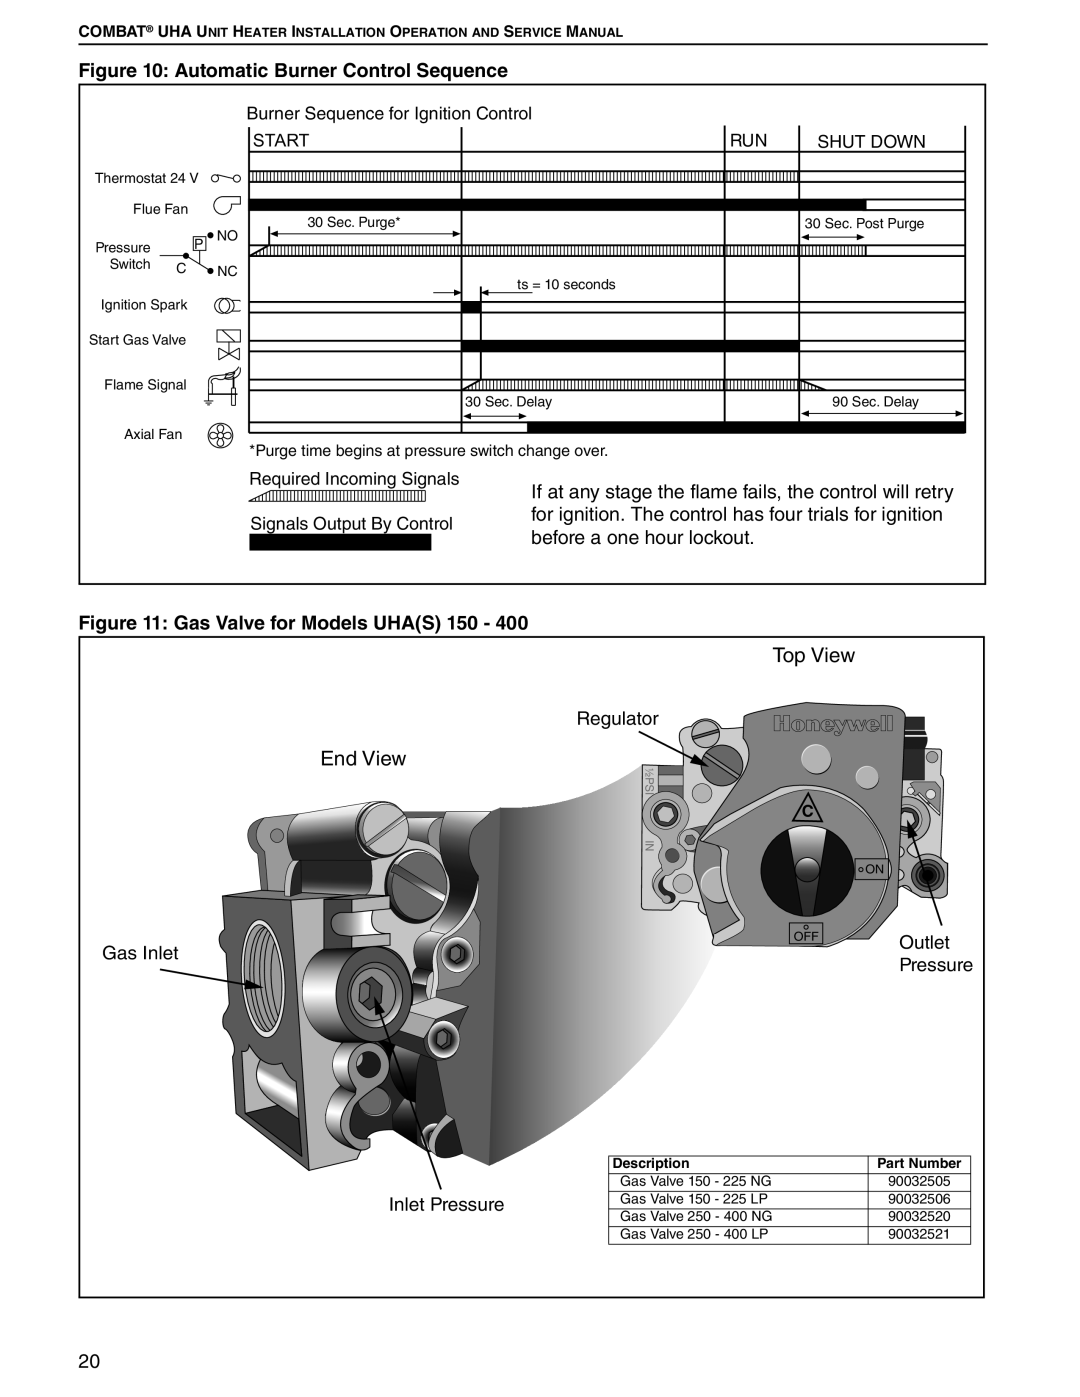 Roberts Gorden 150 Automatic Burner Control Sequence, Gas Valve for Models UHAS, Regulator, Gas Inlet, Outlet, Pressure 